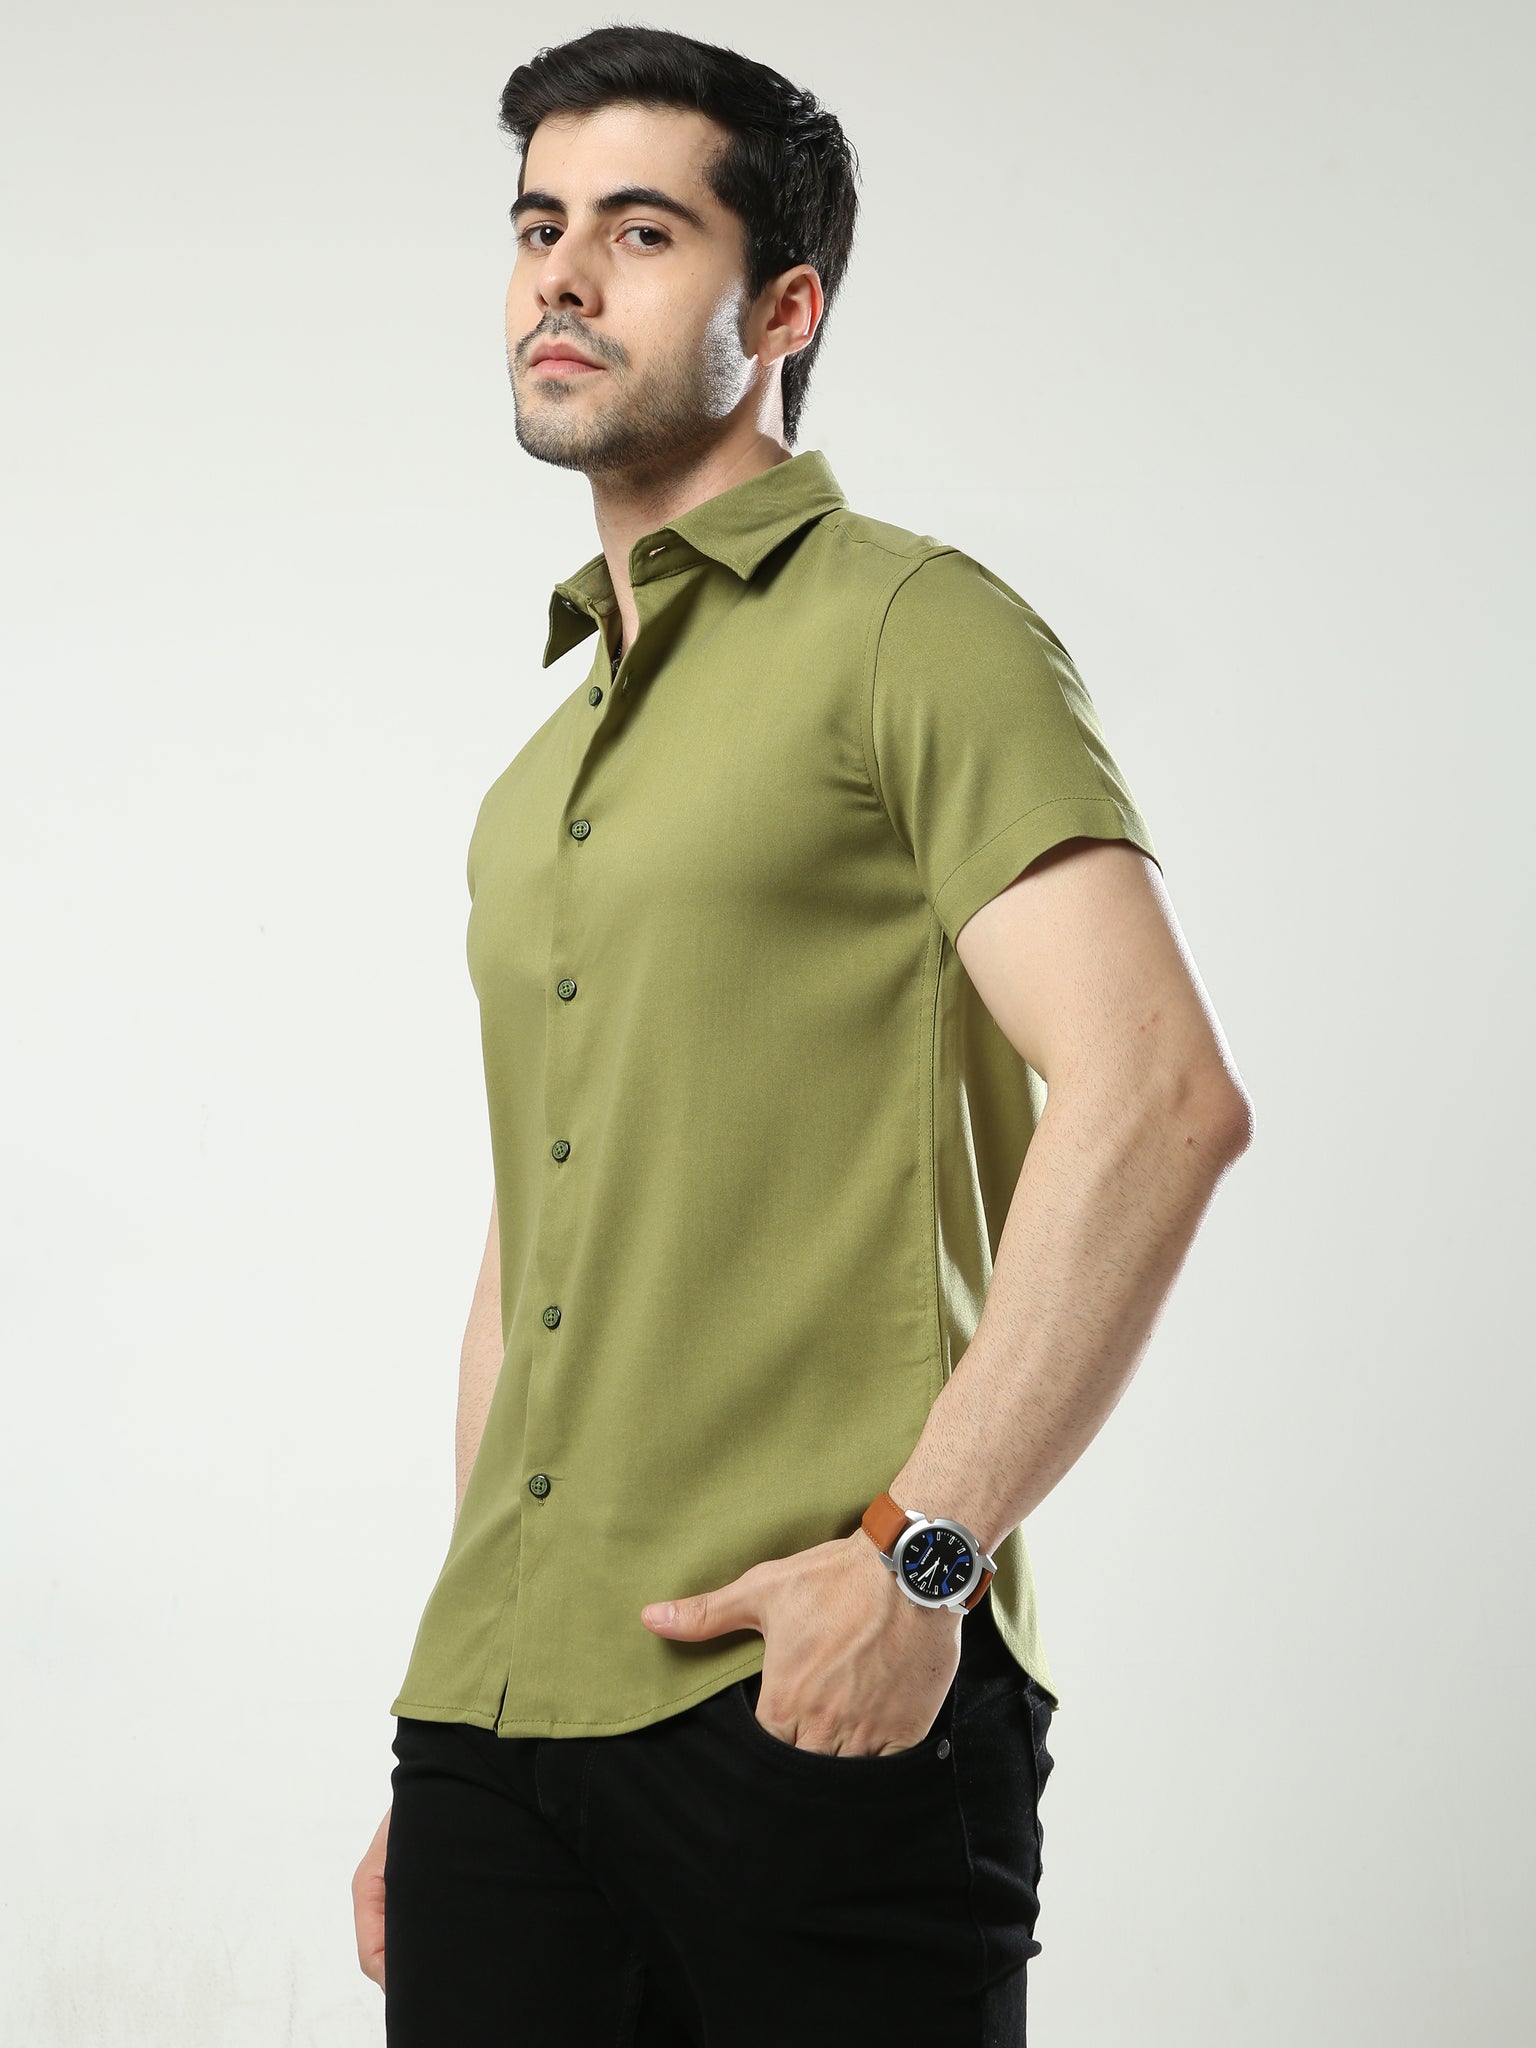 Elite Sap Green Shirt